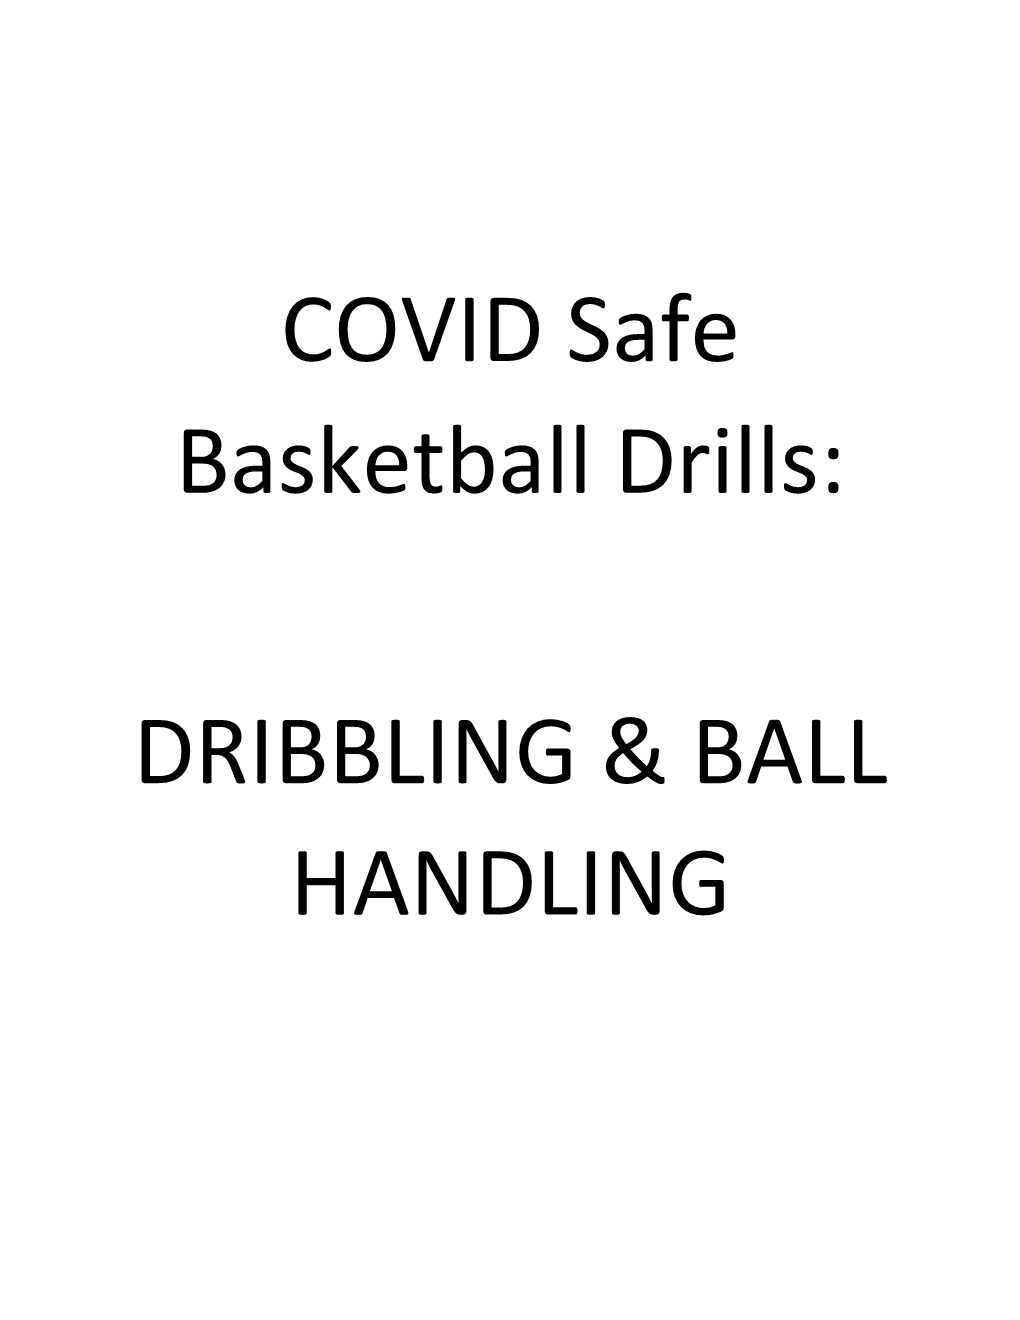 COVID Safe Basketball Drills: DRIBBLING & BALL HANDLING